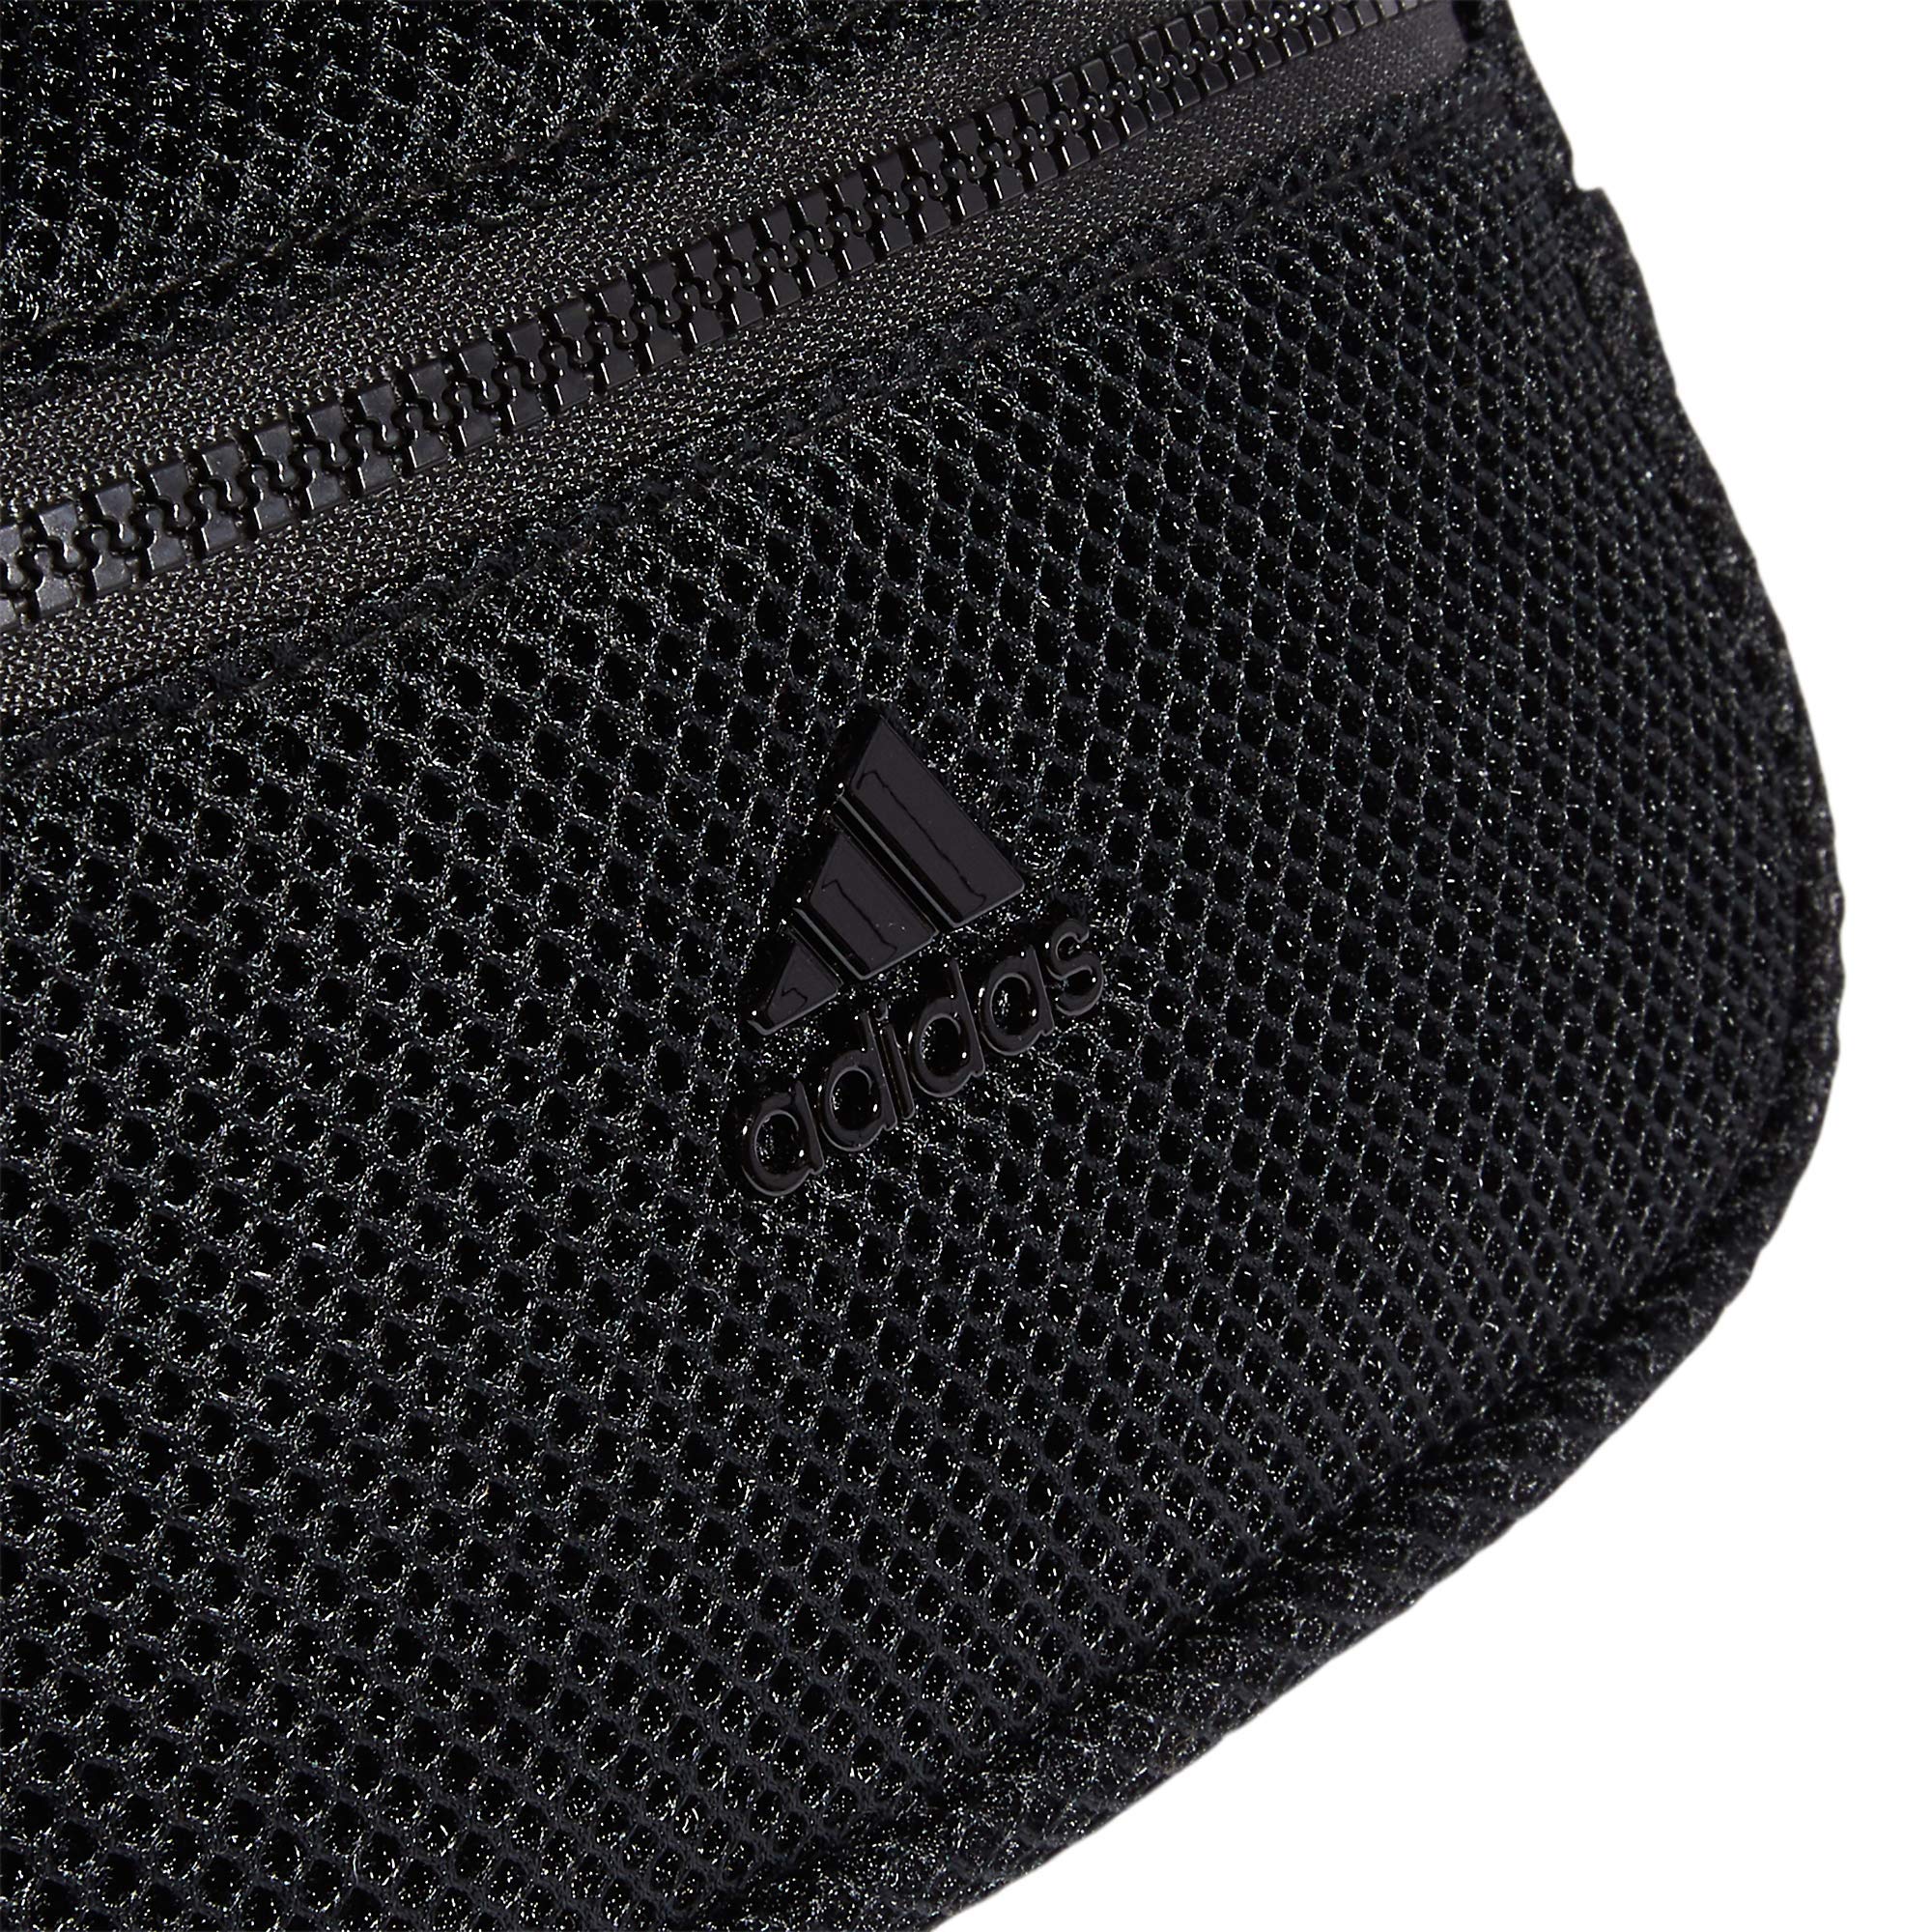 adidas Airmesh Waist Pack/Travel Bag, Black, One Size